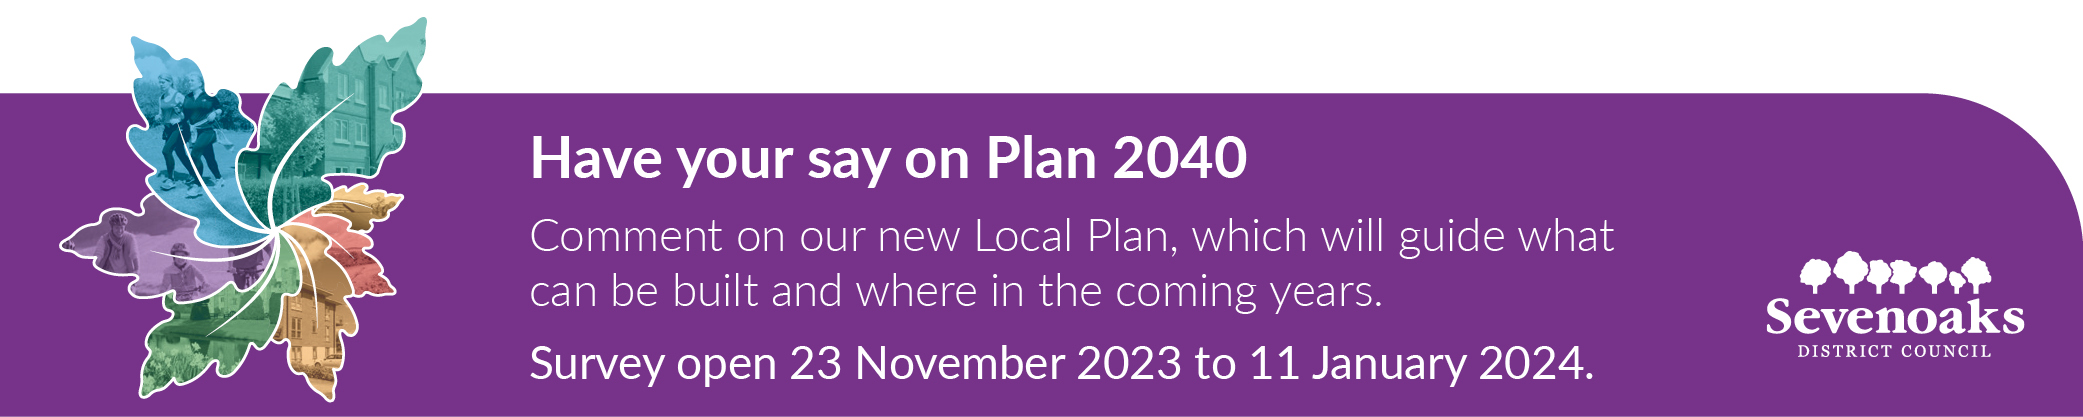 Plan 2040 A New Local Plan for Sevenoaks District